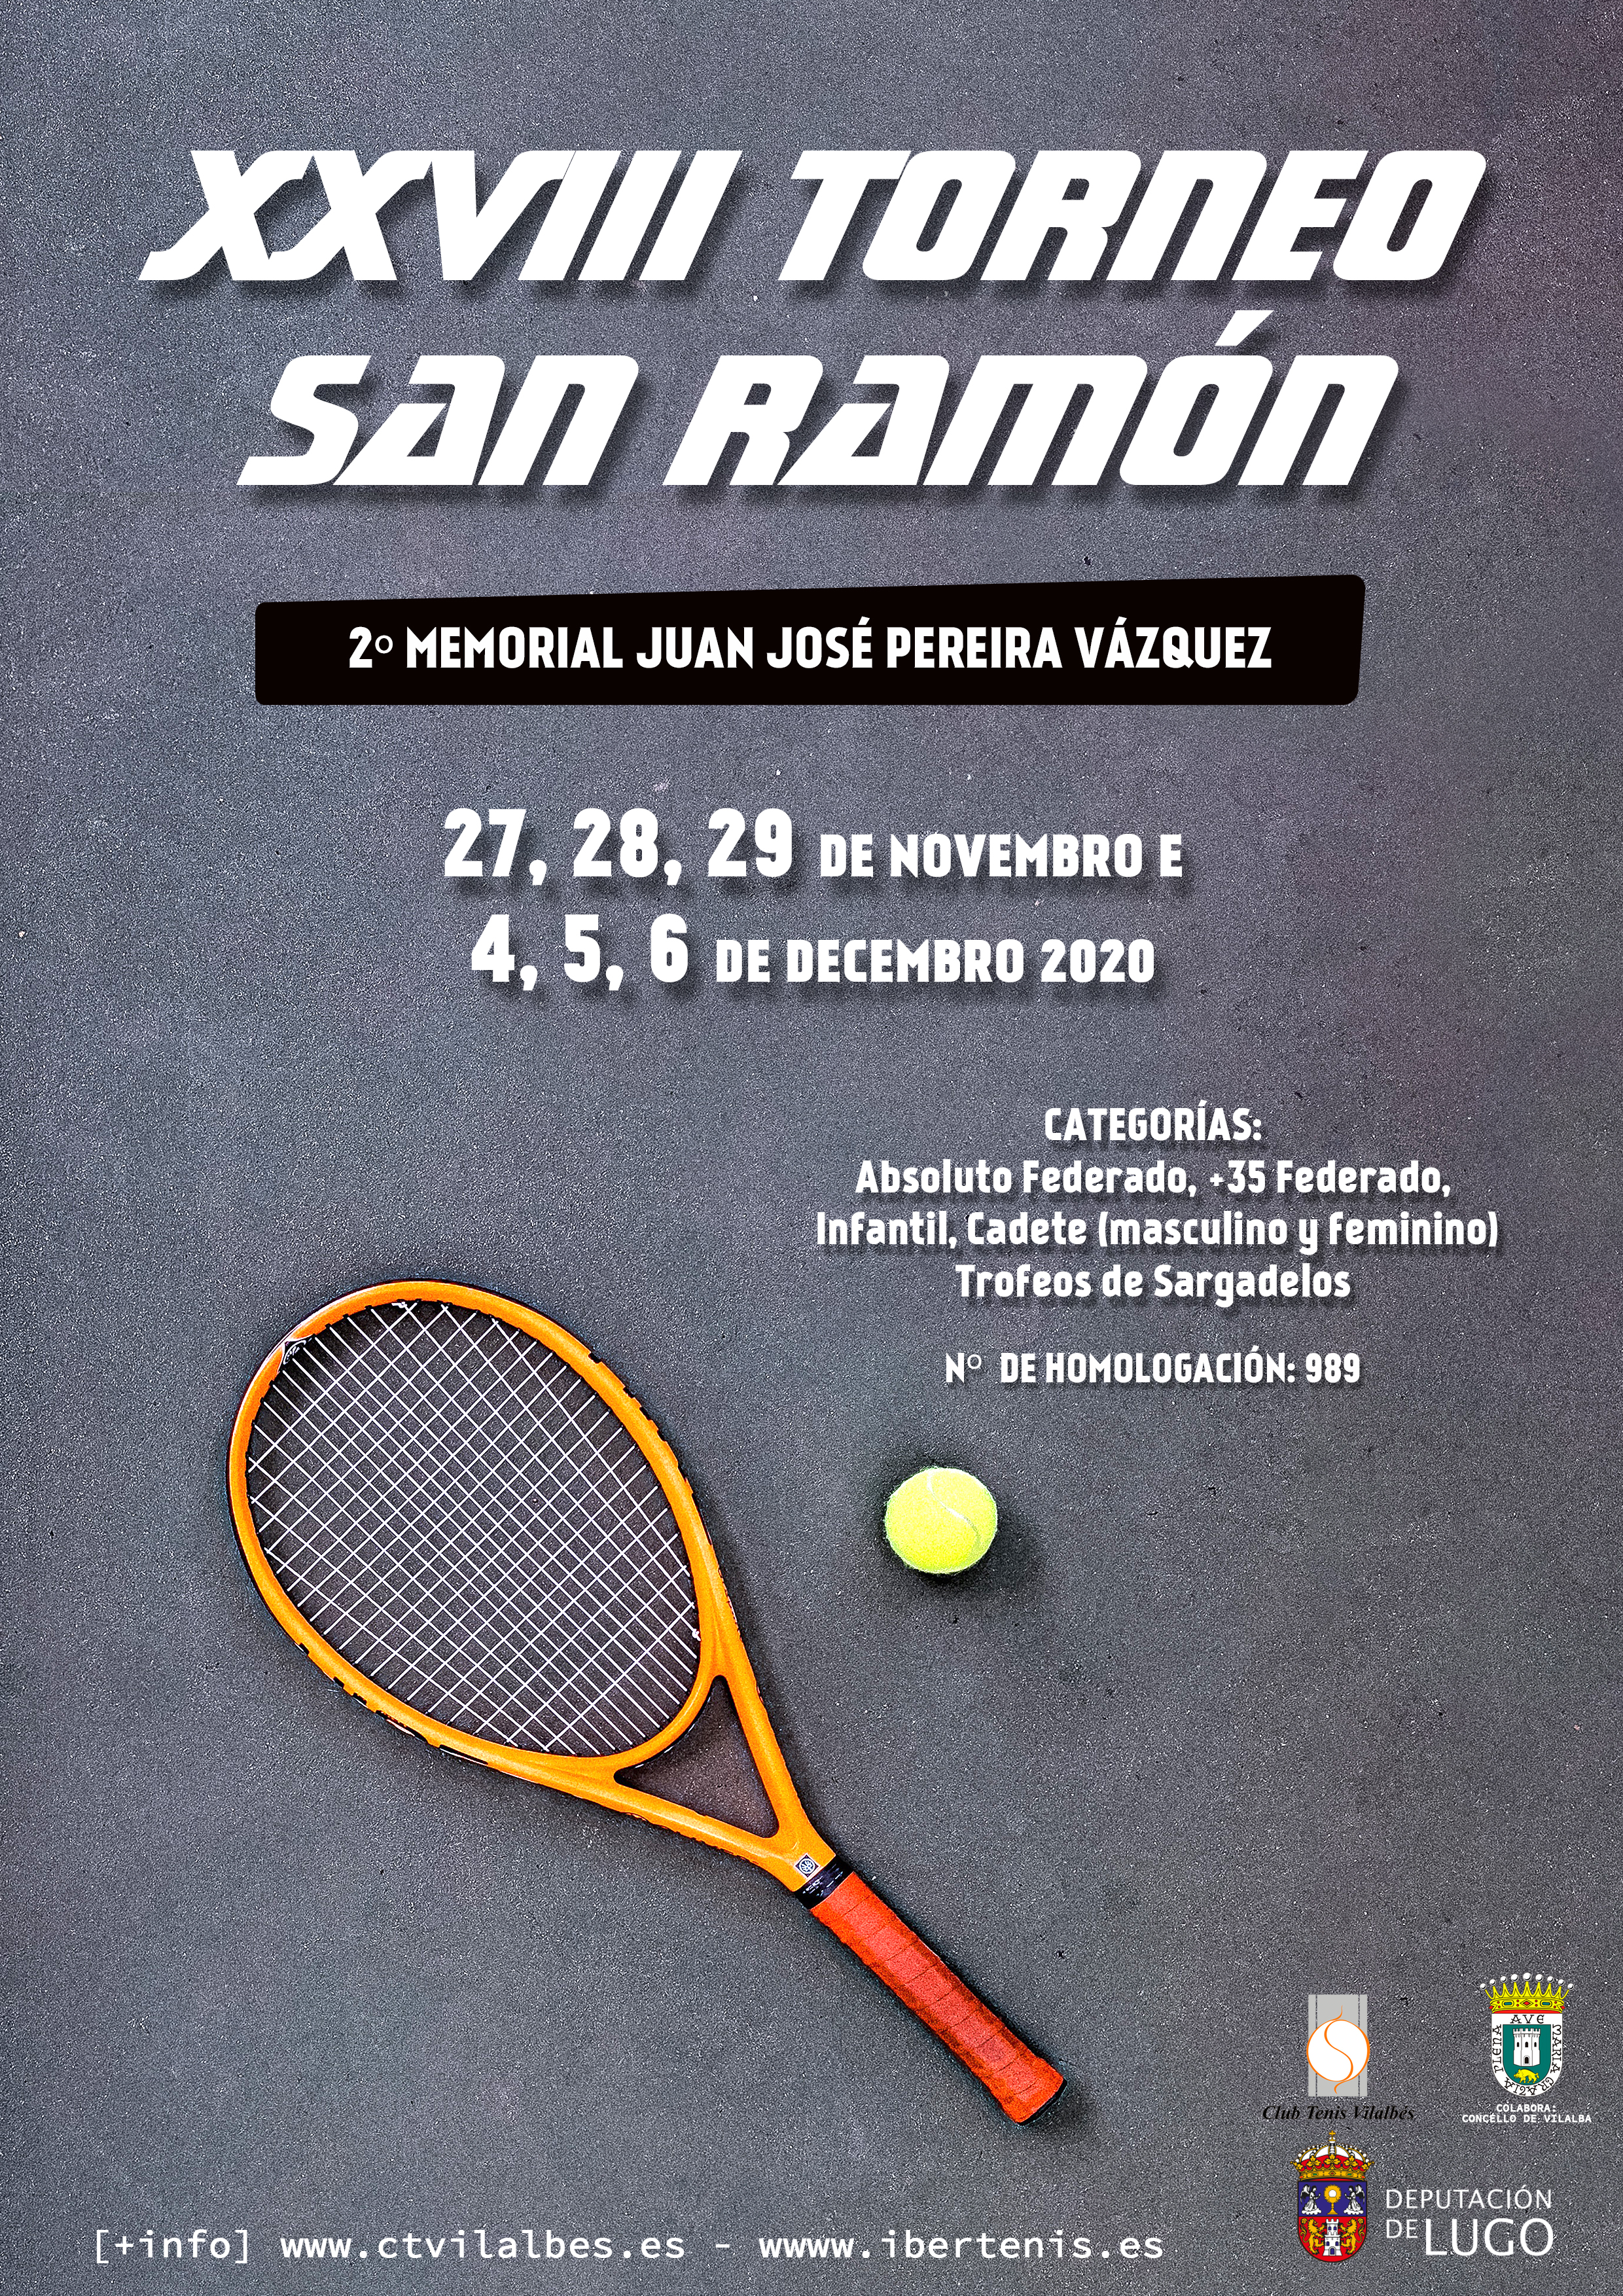 Cartel del XXVIII TORNEO SAN RAMON 2020 (2º Memorial Juan Jose Vazquez Pereira)